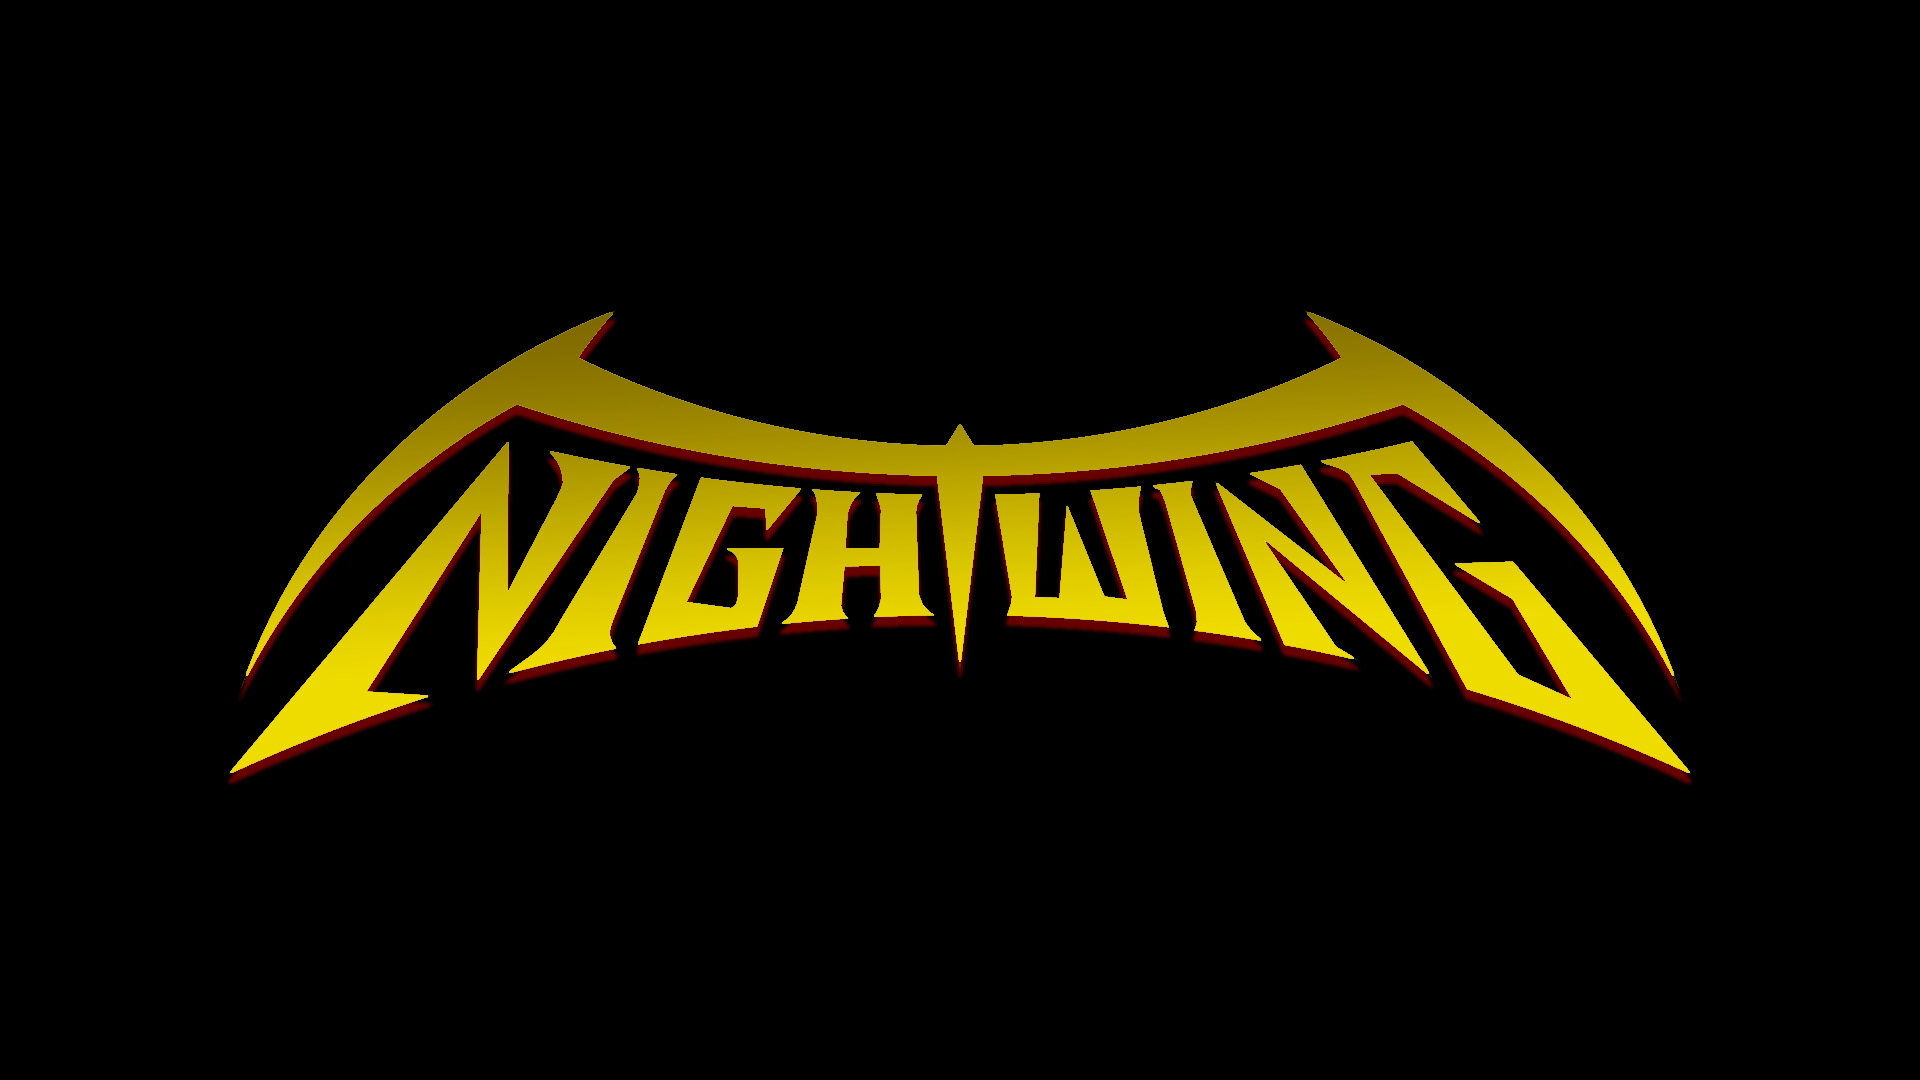 Nightwing fanart